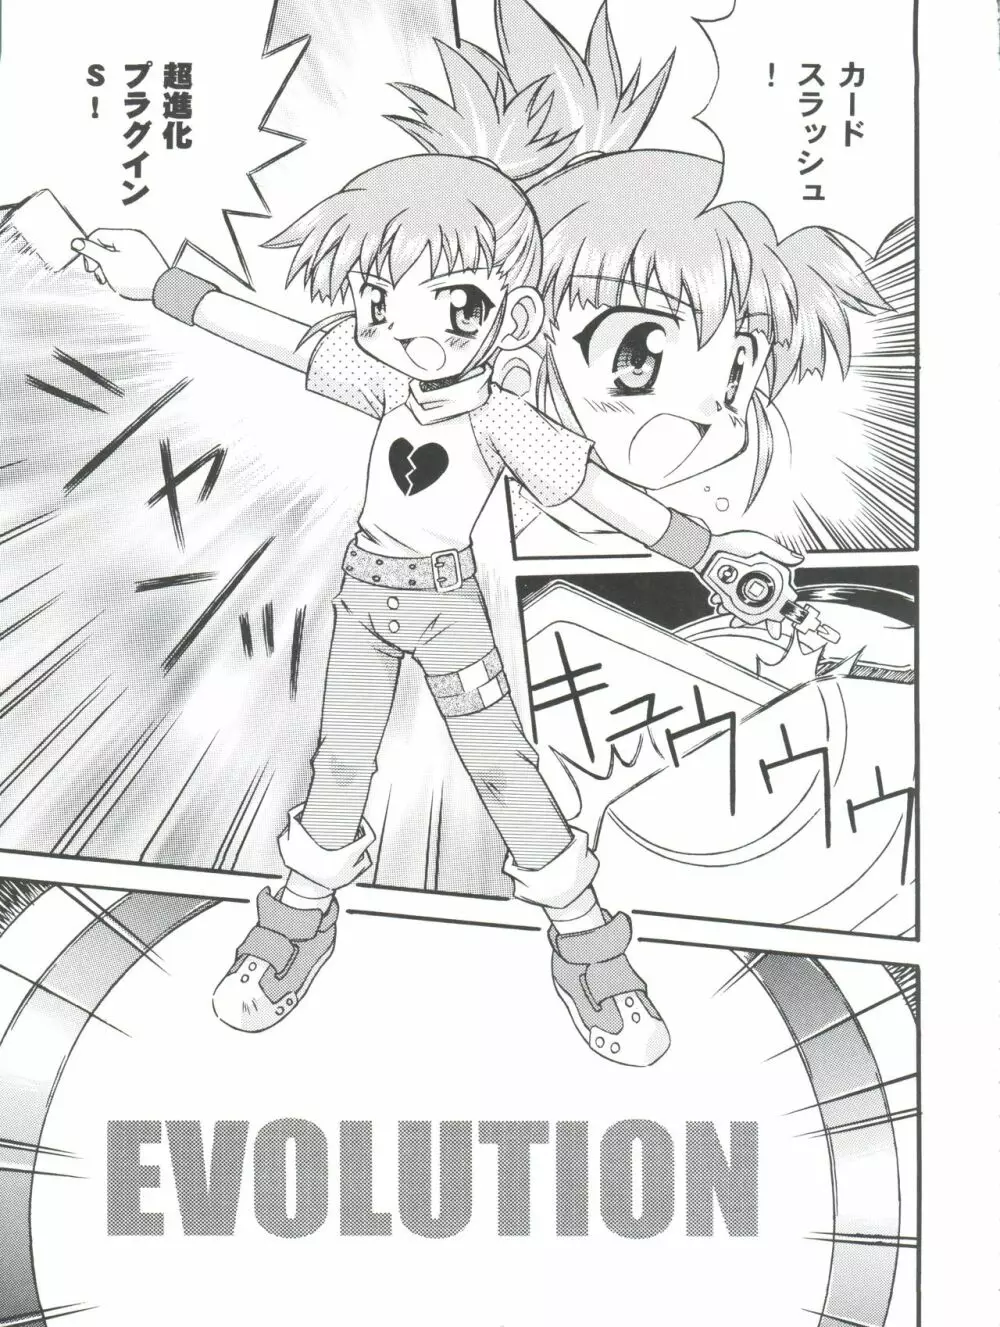 EVOLUTION SLASH - page5